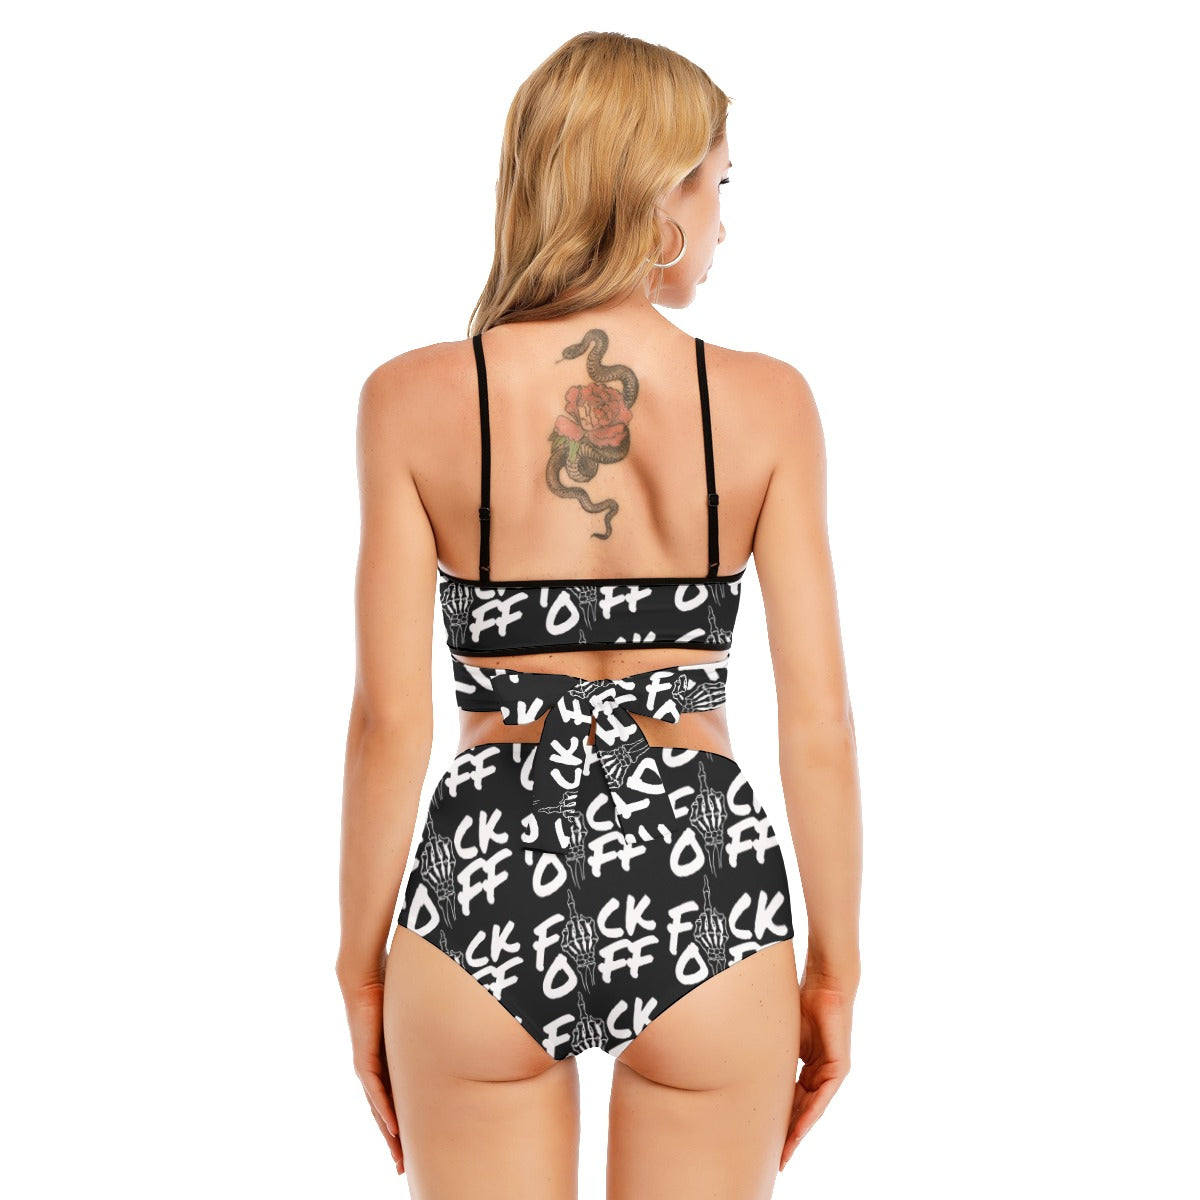 F*CK OFF Bikini Swimsuit With Cross Straps